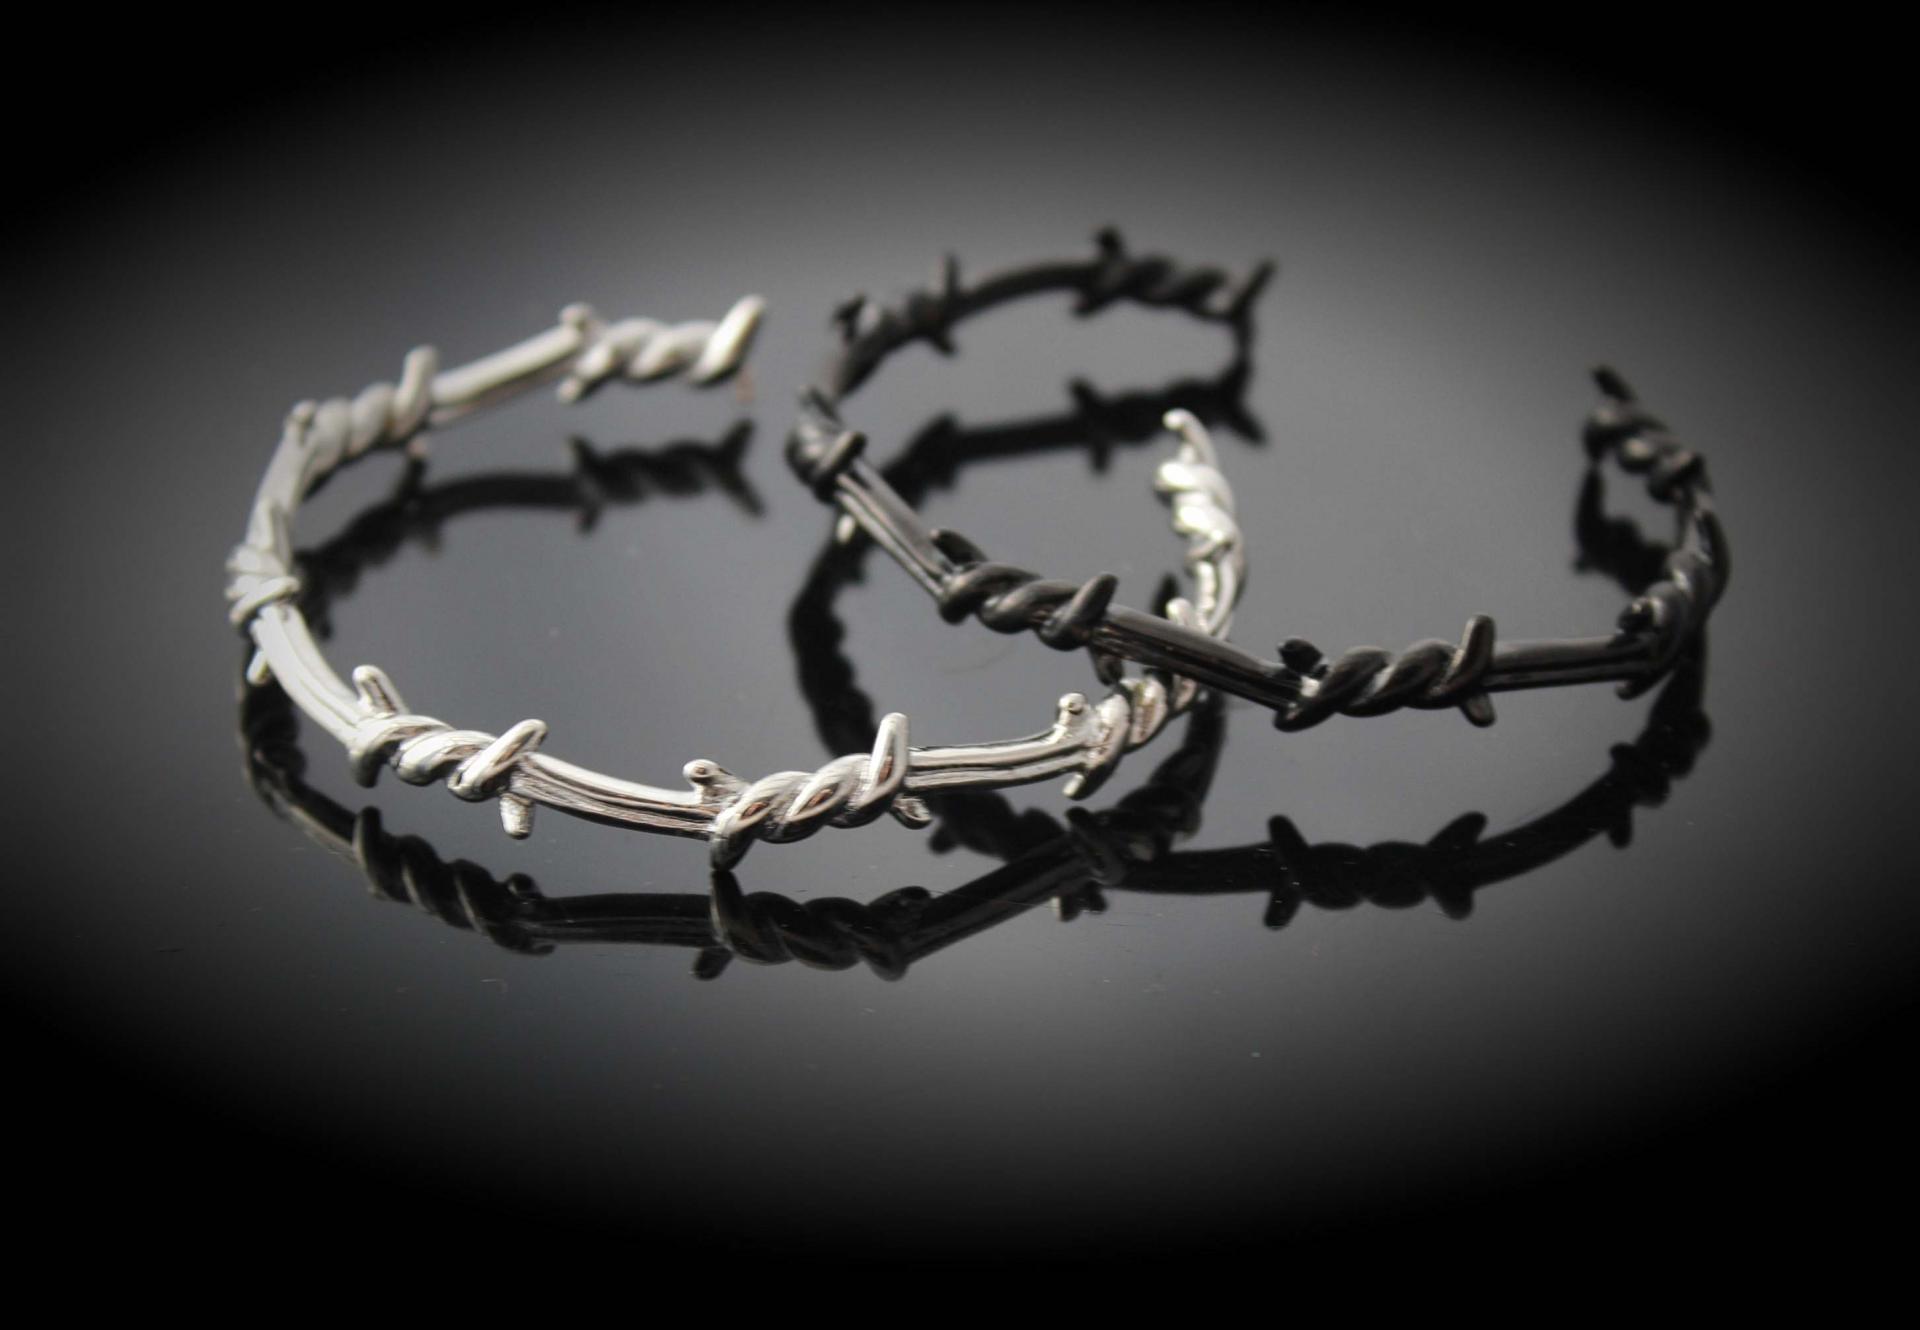 Echt etNox Black Barbed Wire Bracelet | Angel Clothing